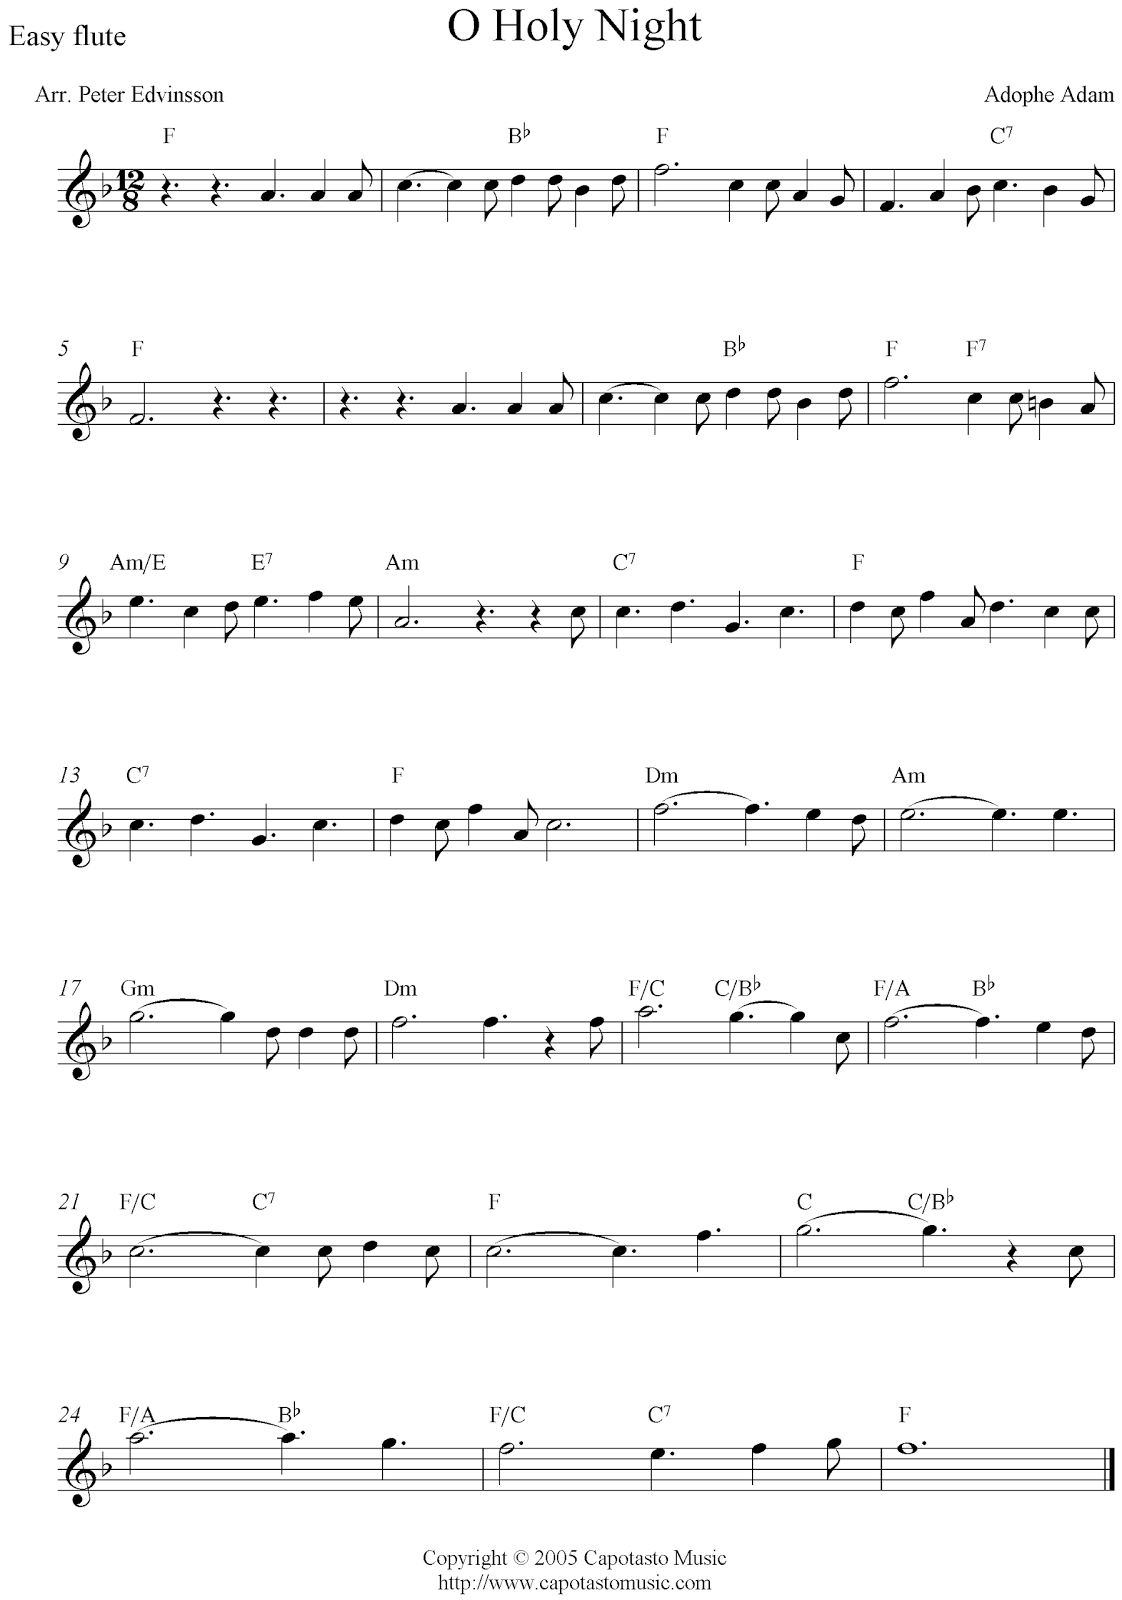 O Holy Night, free Christmas flute sheet music notes